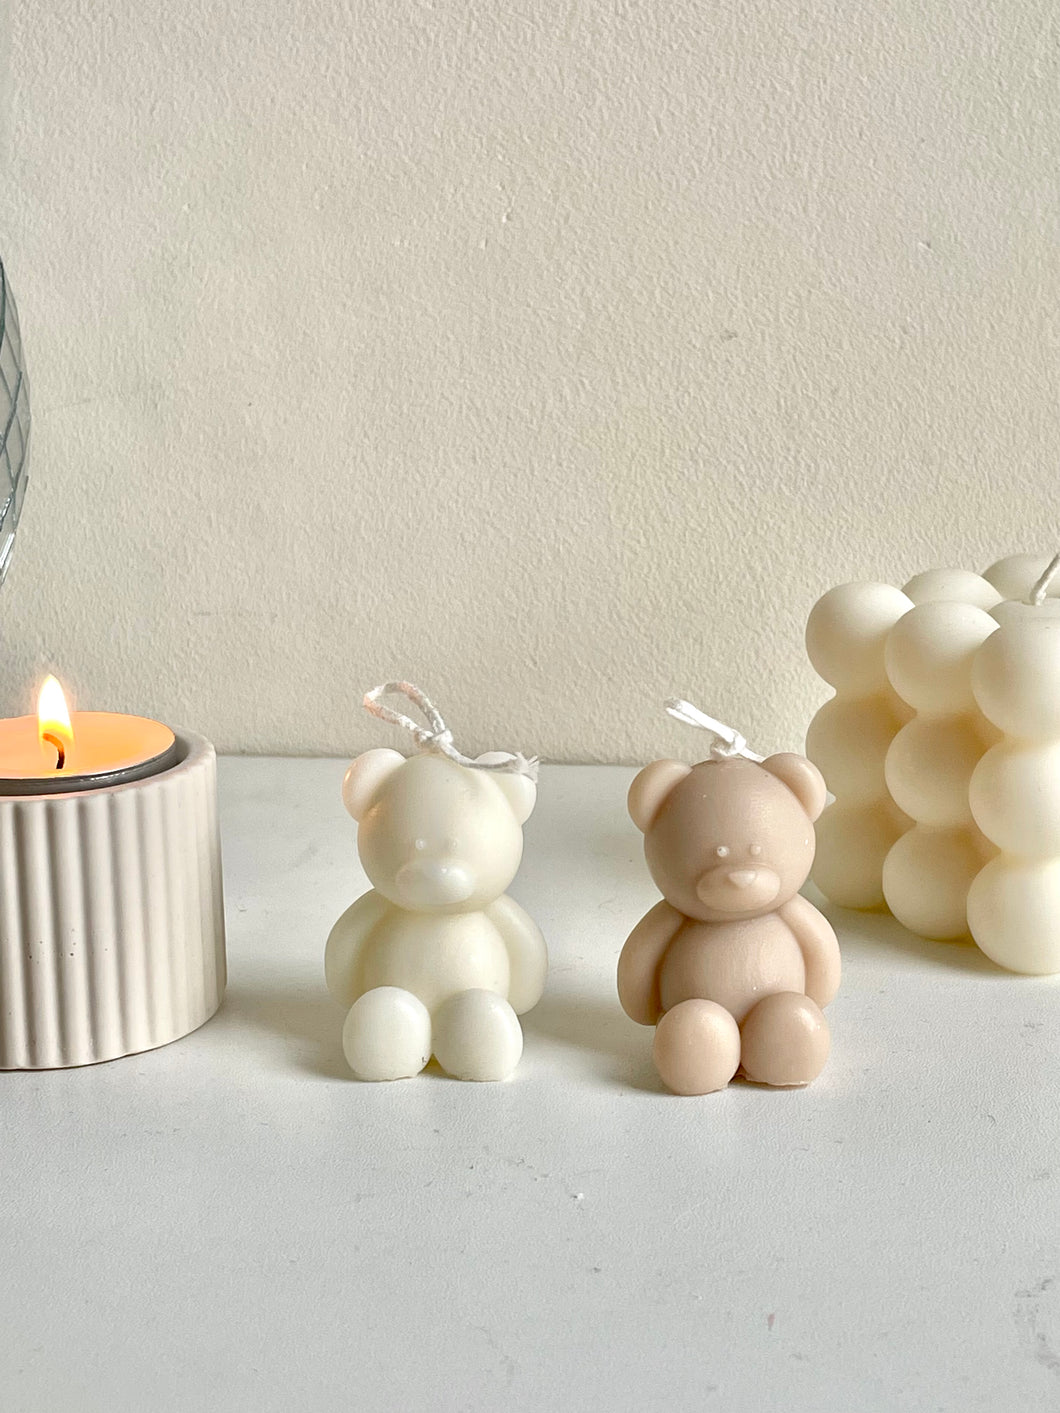 Bear candles